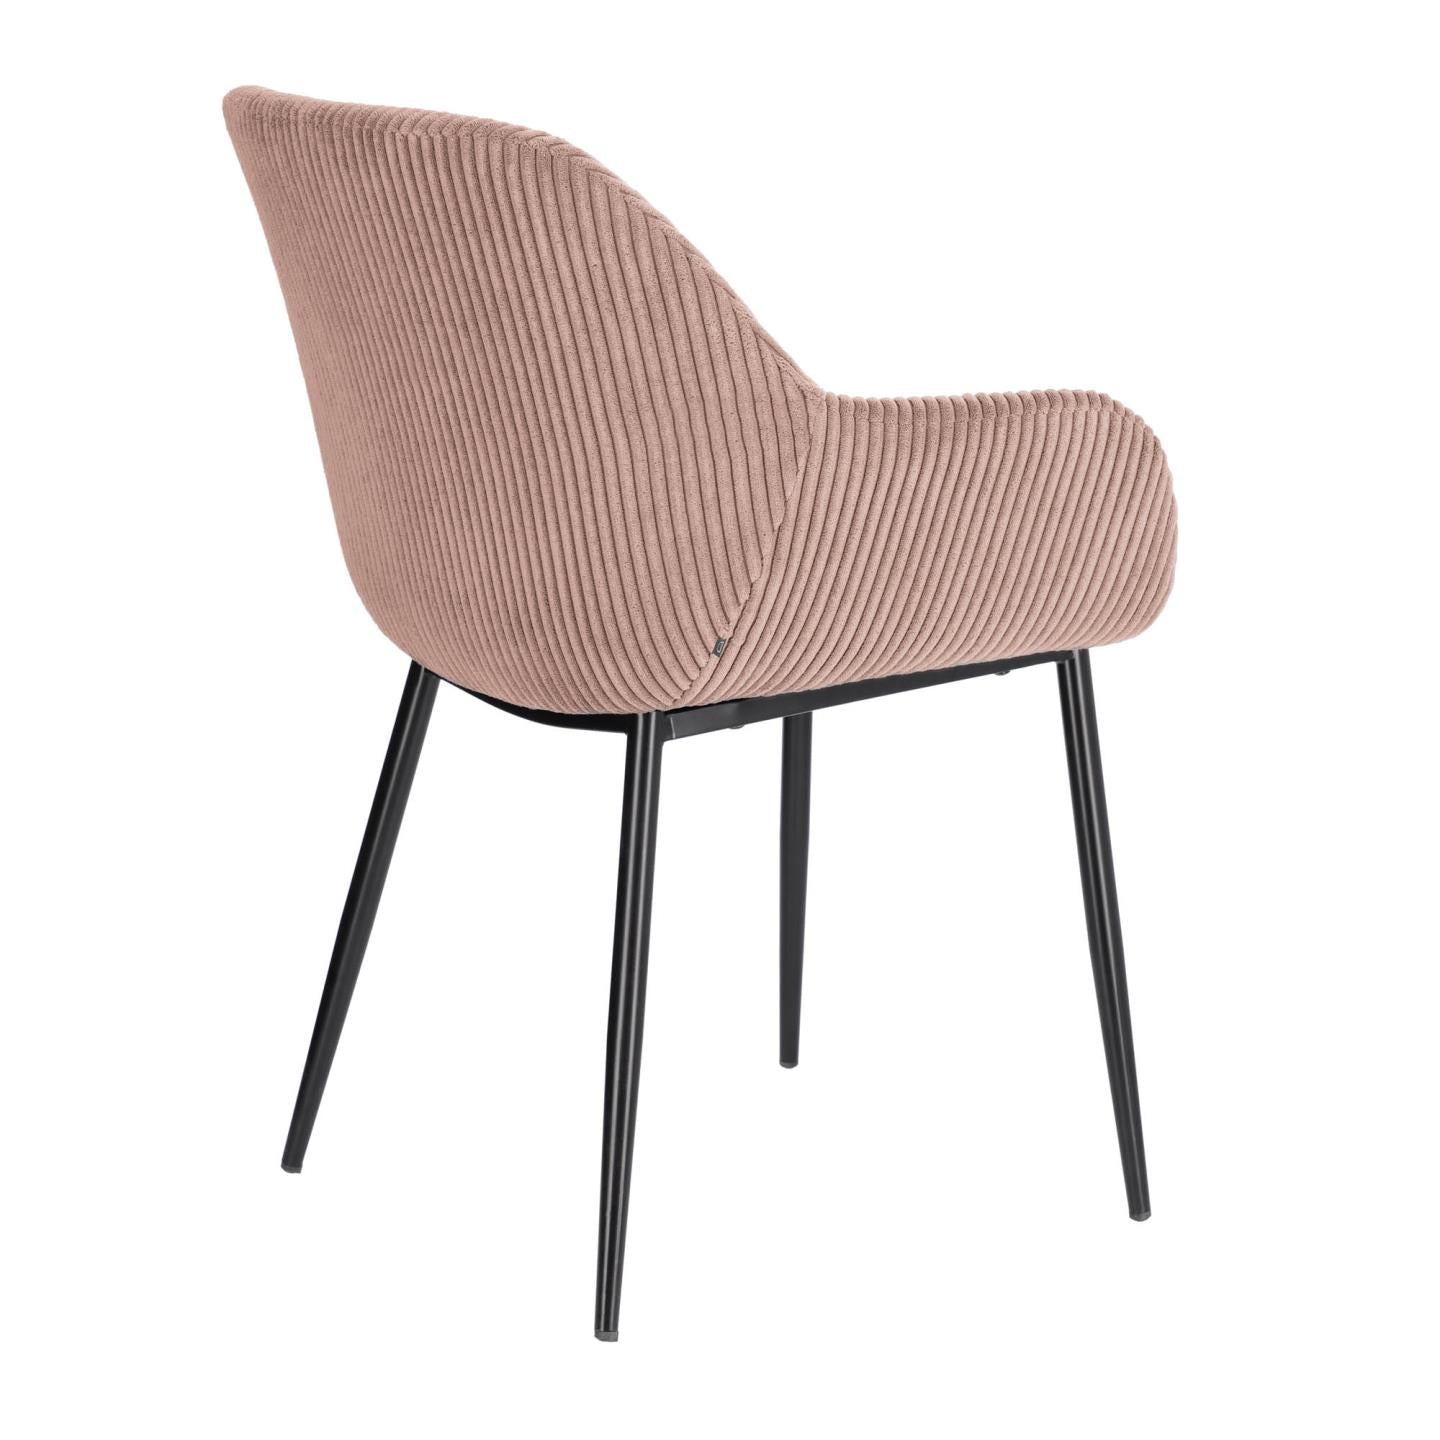 Konna chair in pink wide seam corduroy